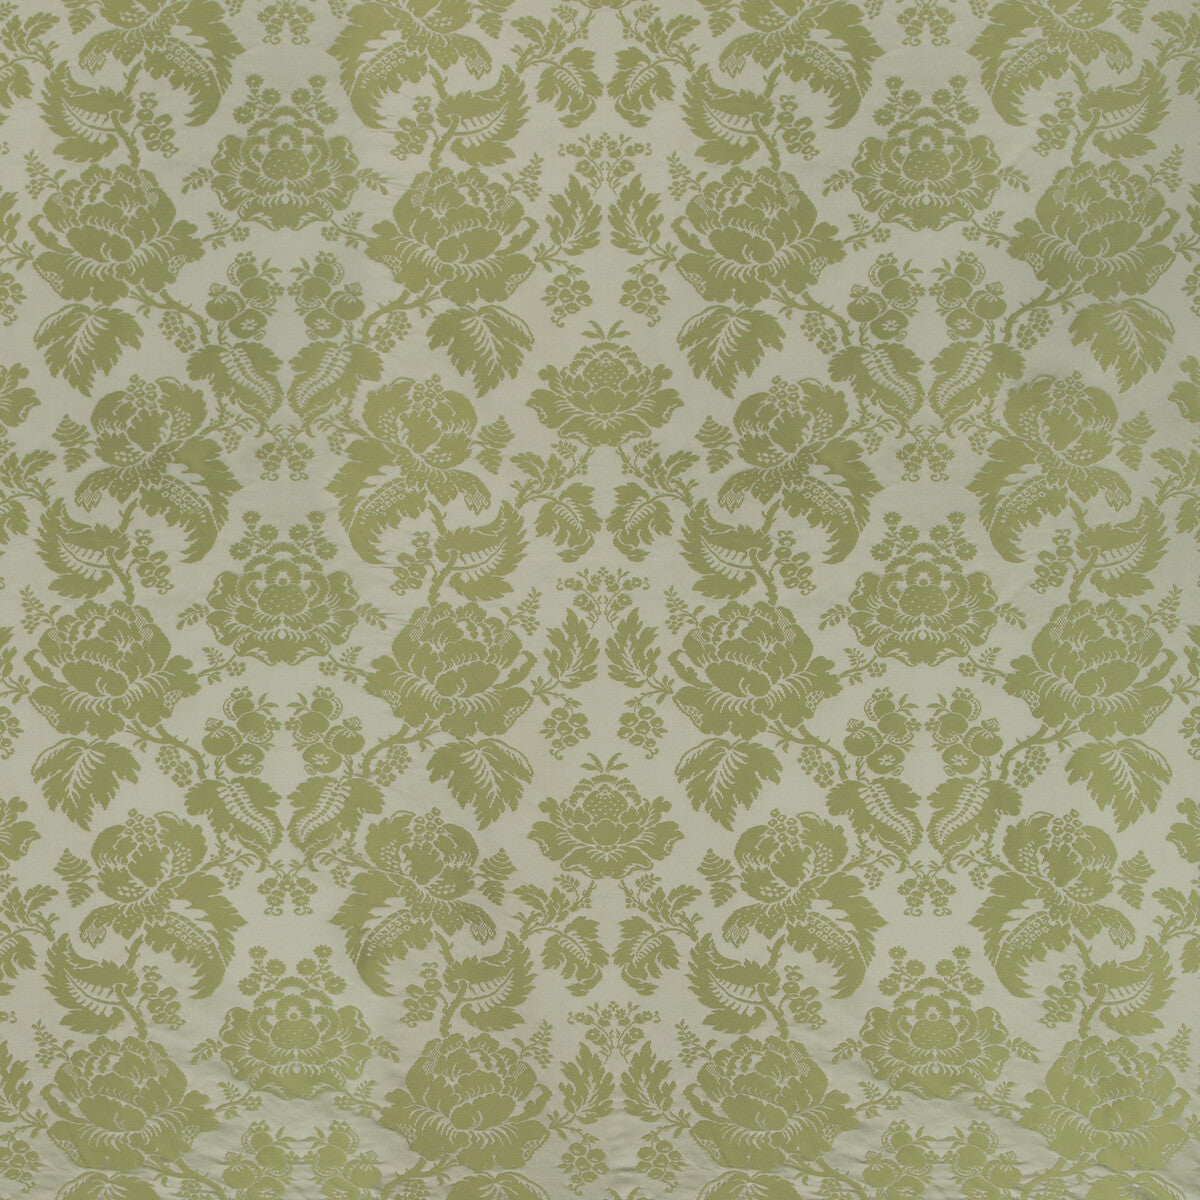 Moulins Damask fabric in lichen color - pattern BR-81035.311.0 - by Brunschwig &amp; Fils